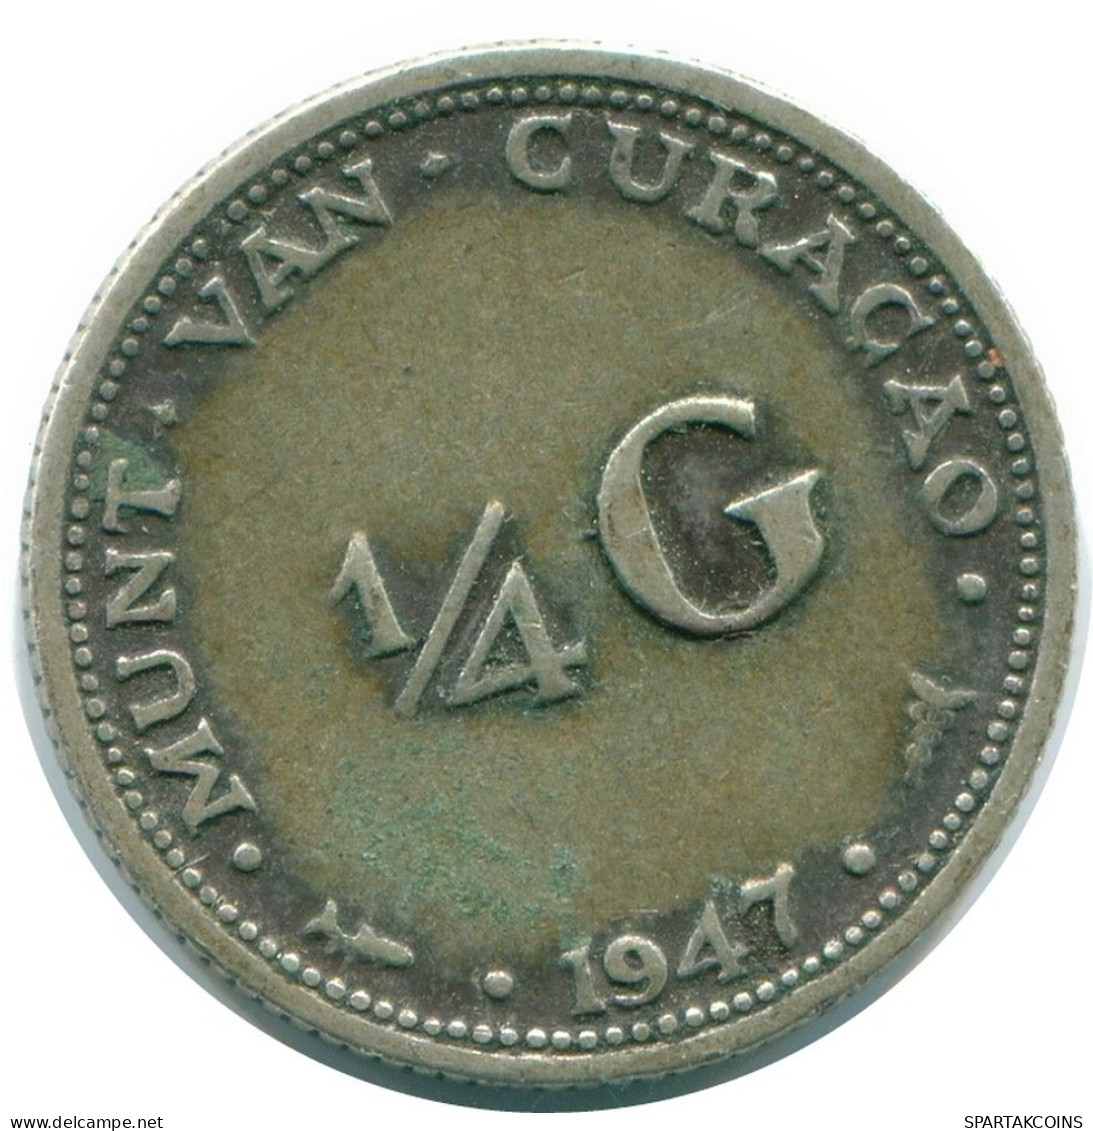 1/4 GULDEN 1947 CURACAO Netherlands SILVER Colonial Coin #NL10803.4.U.A - Curaçao